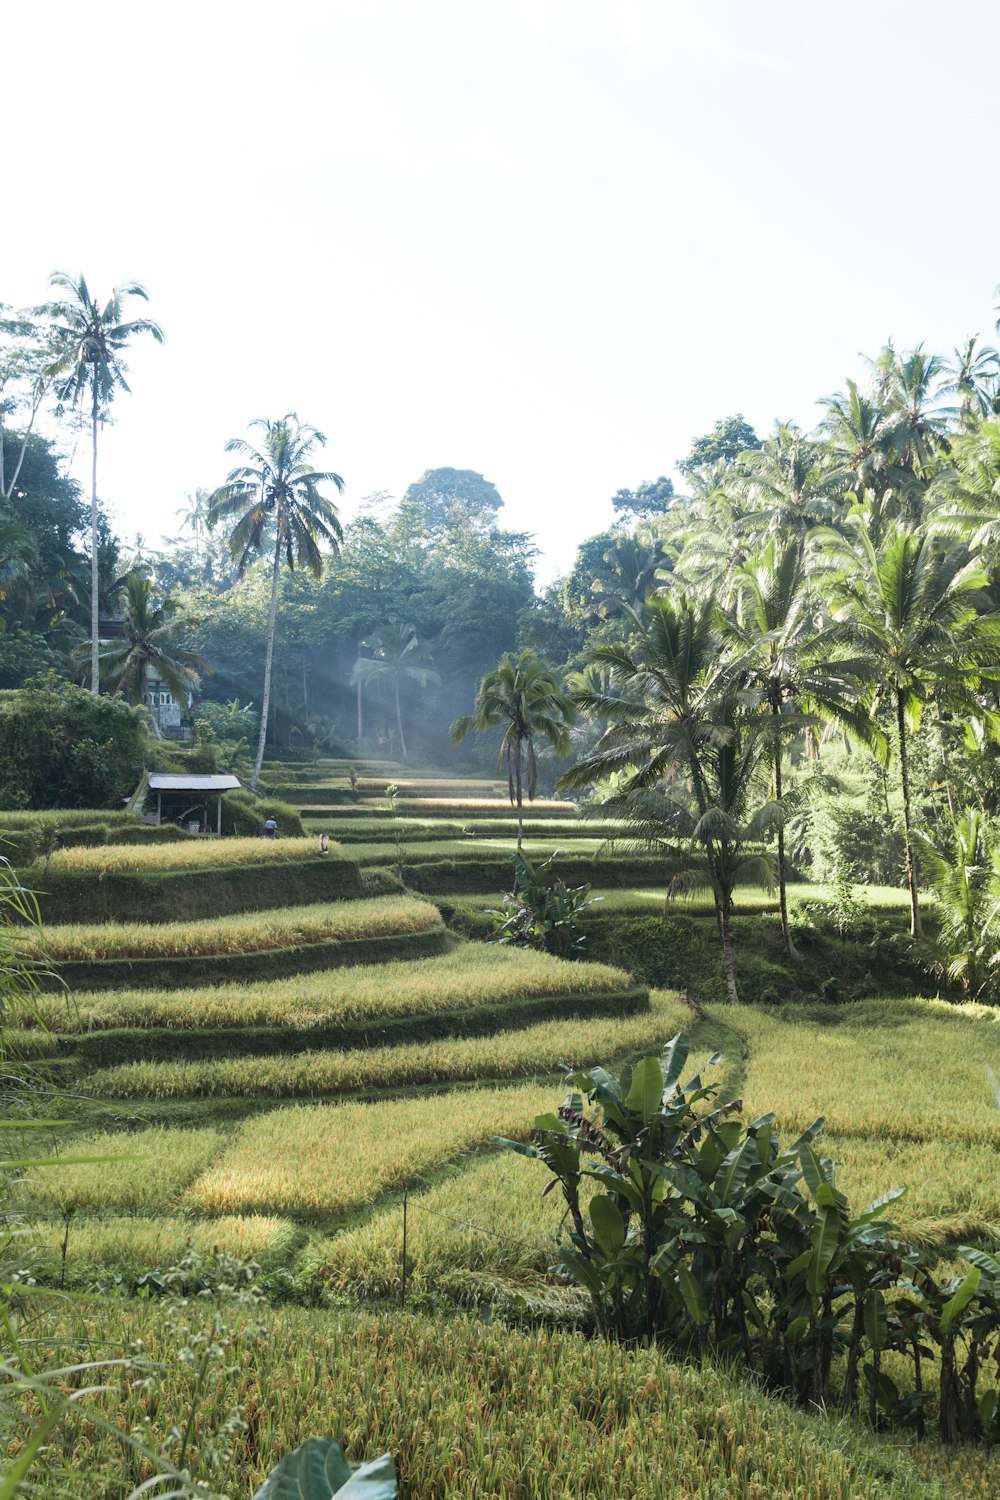 green grass field near coconut trees